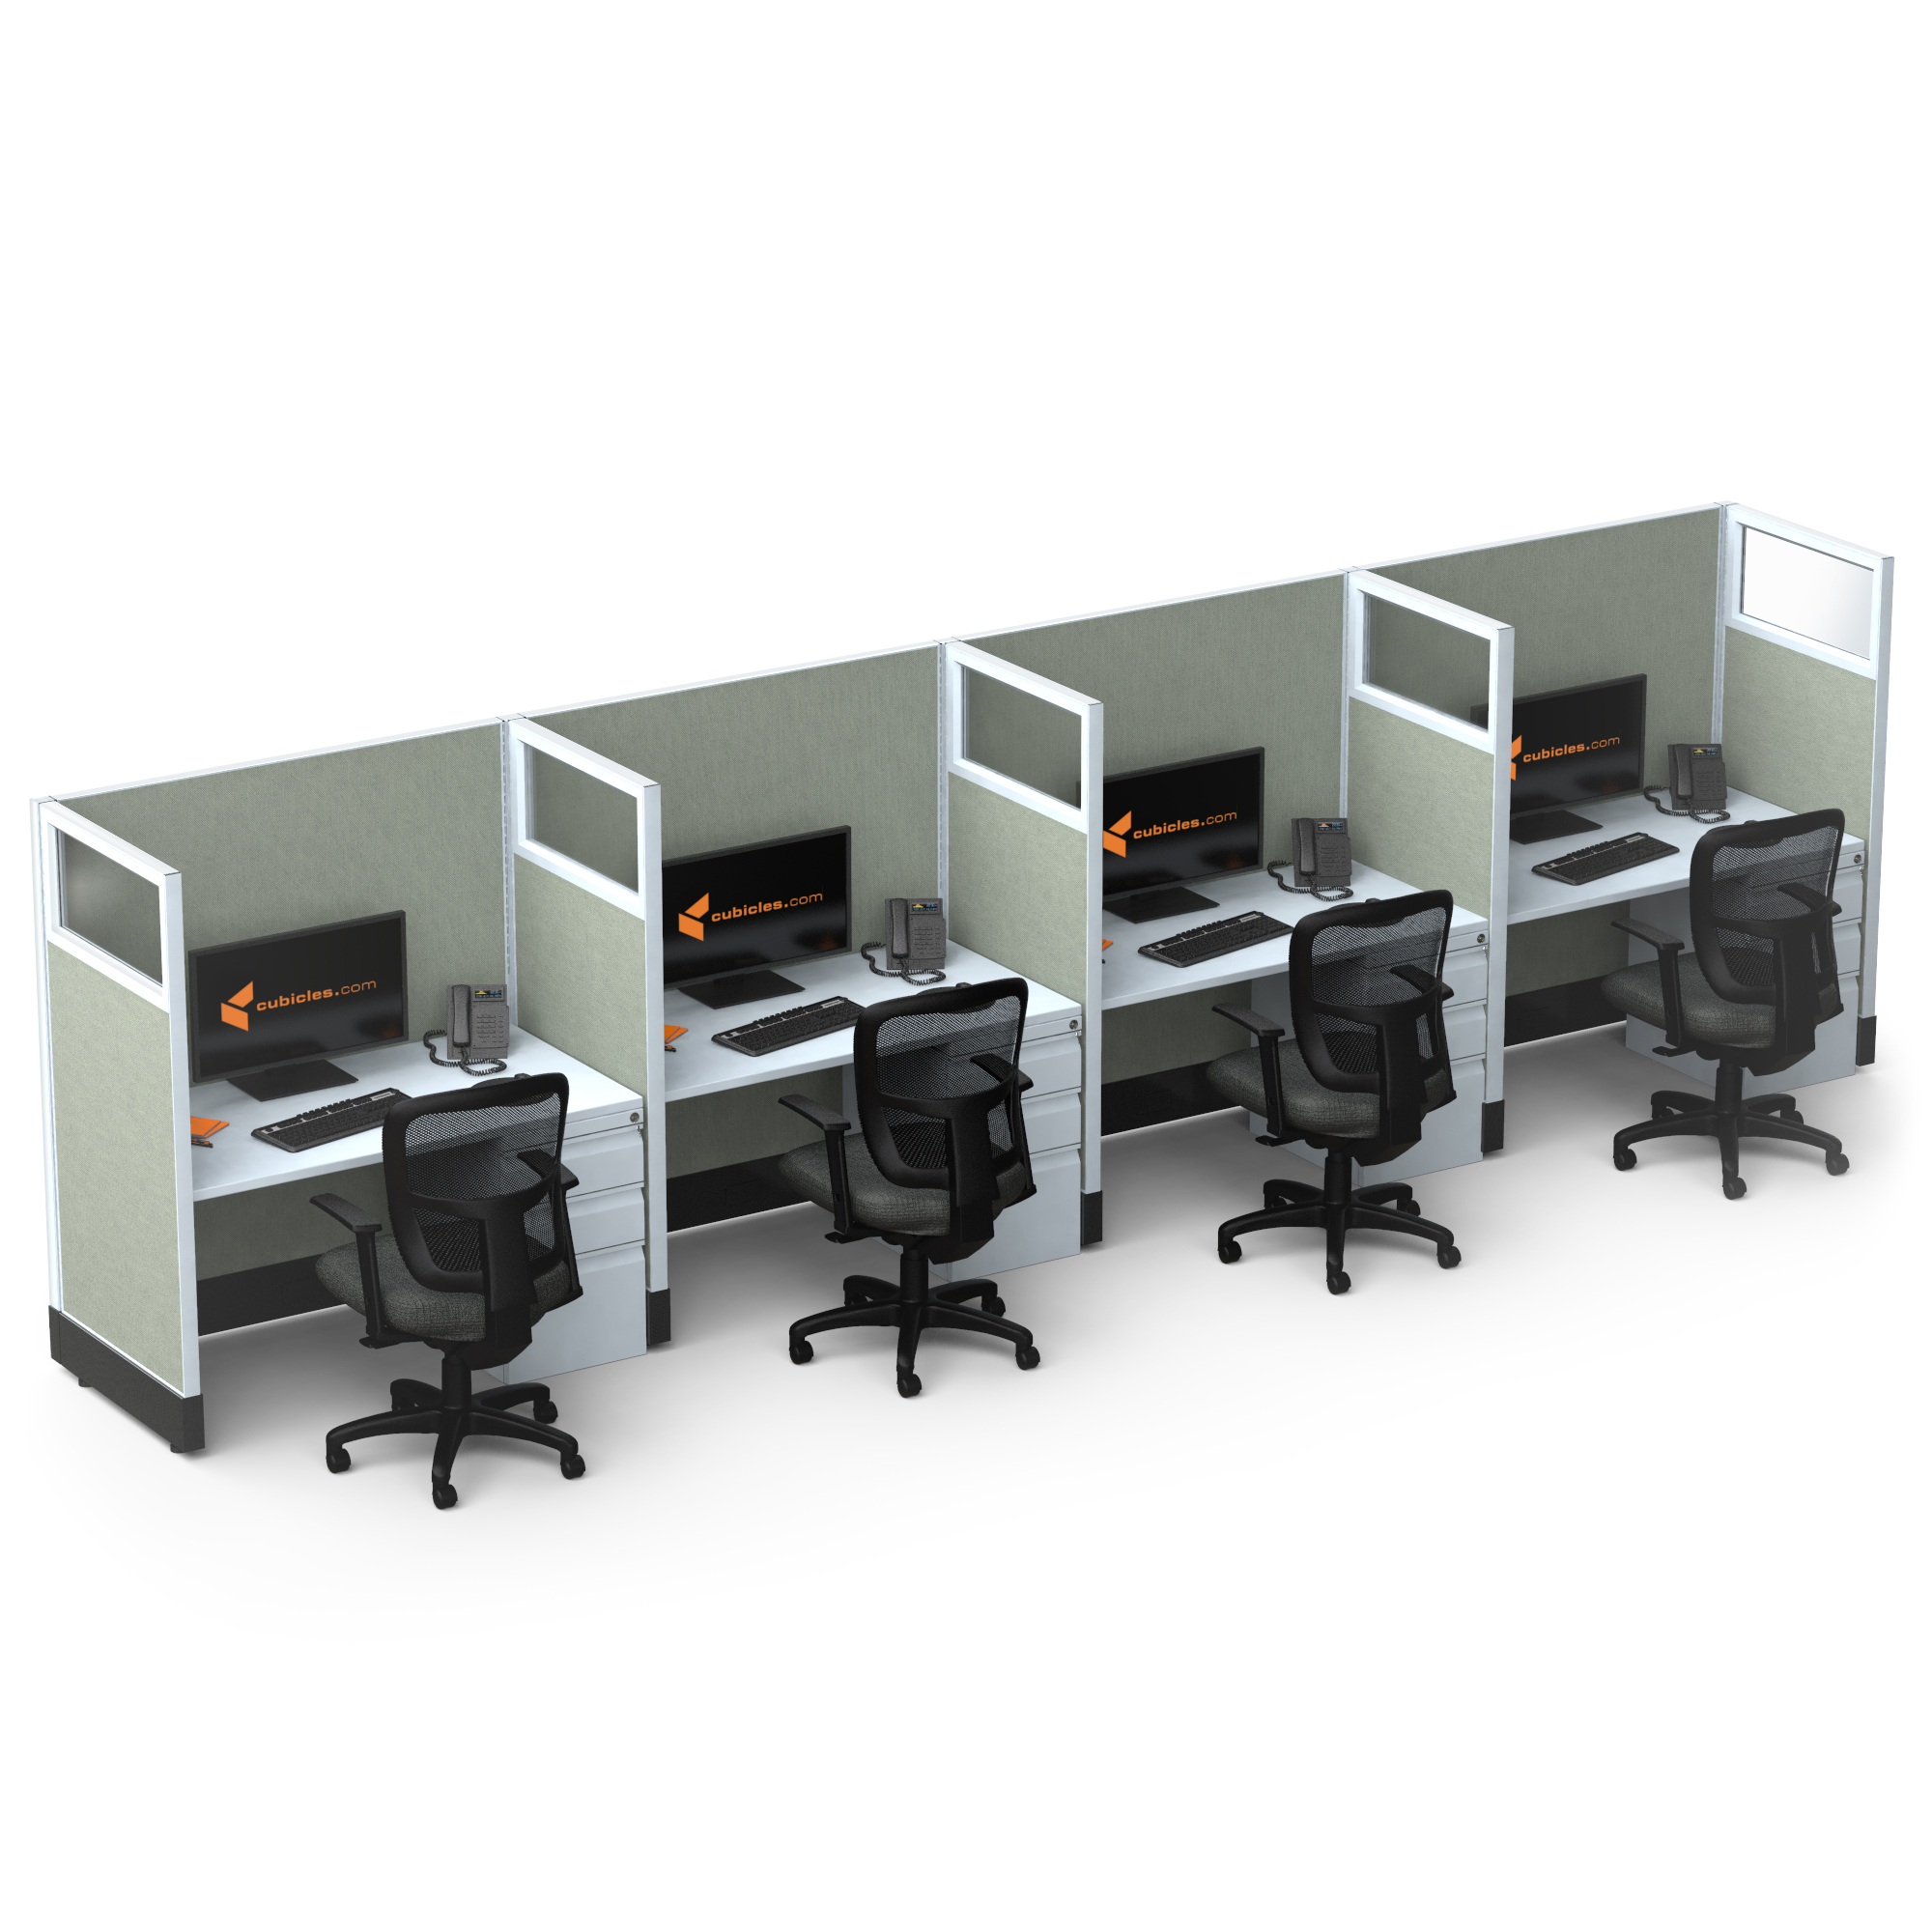 Hot desking cubicle workstations 4i pack powered